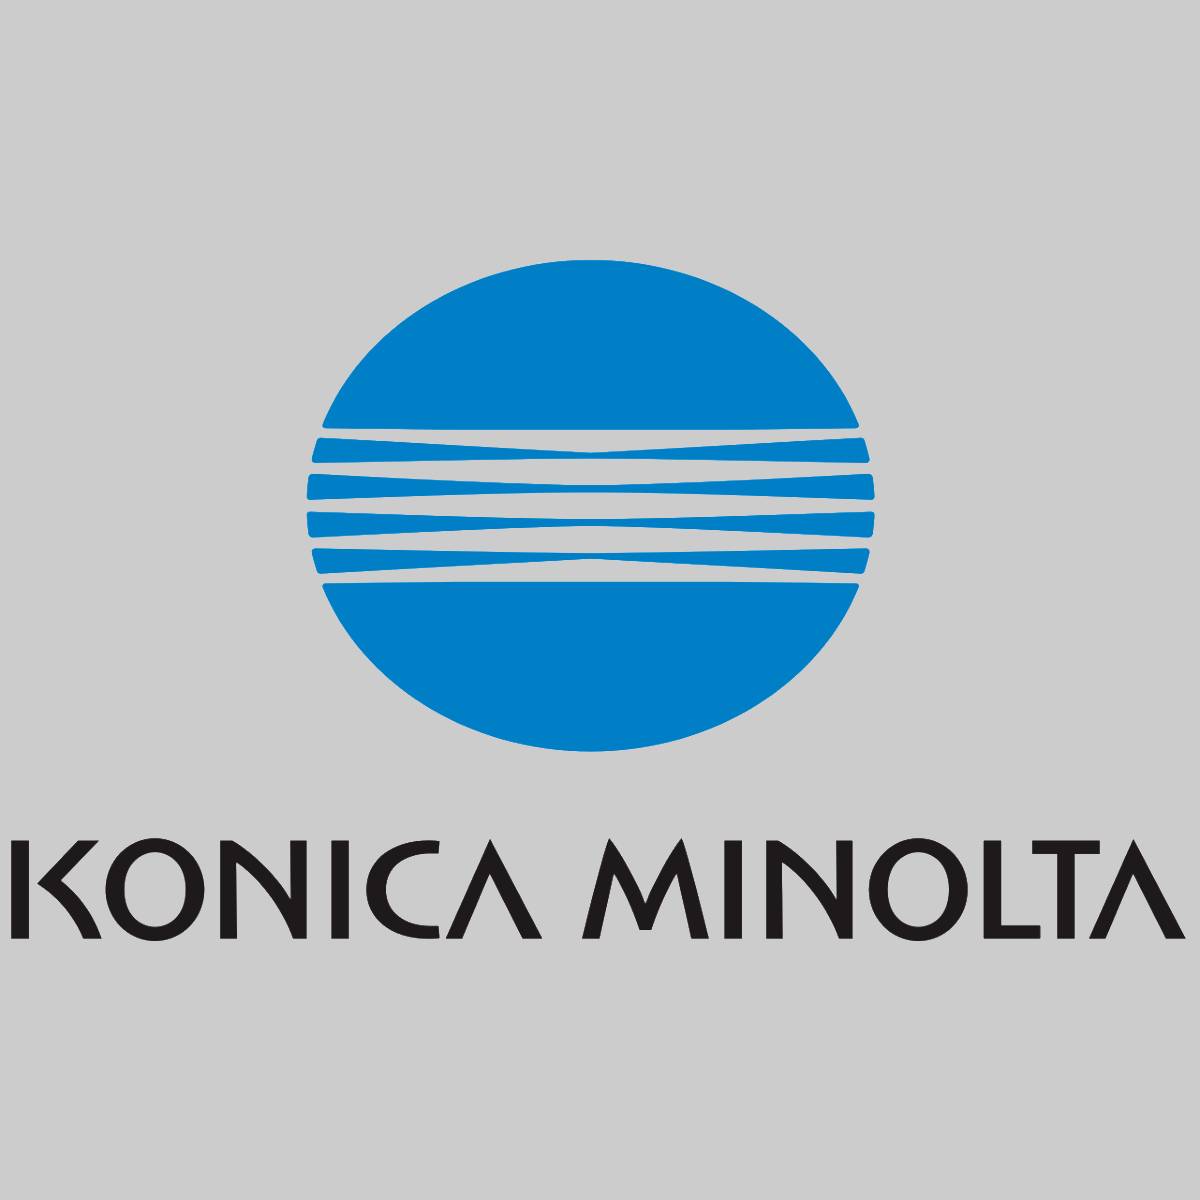 "Toner d'origine Konica Minolta Magenta 1710490-003 pour Magicolor 3100 NEW OVP